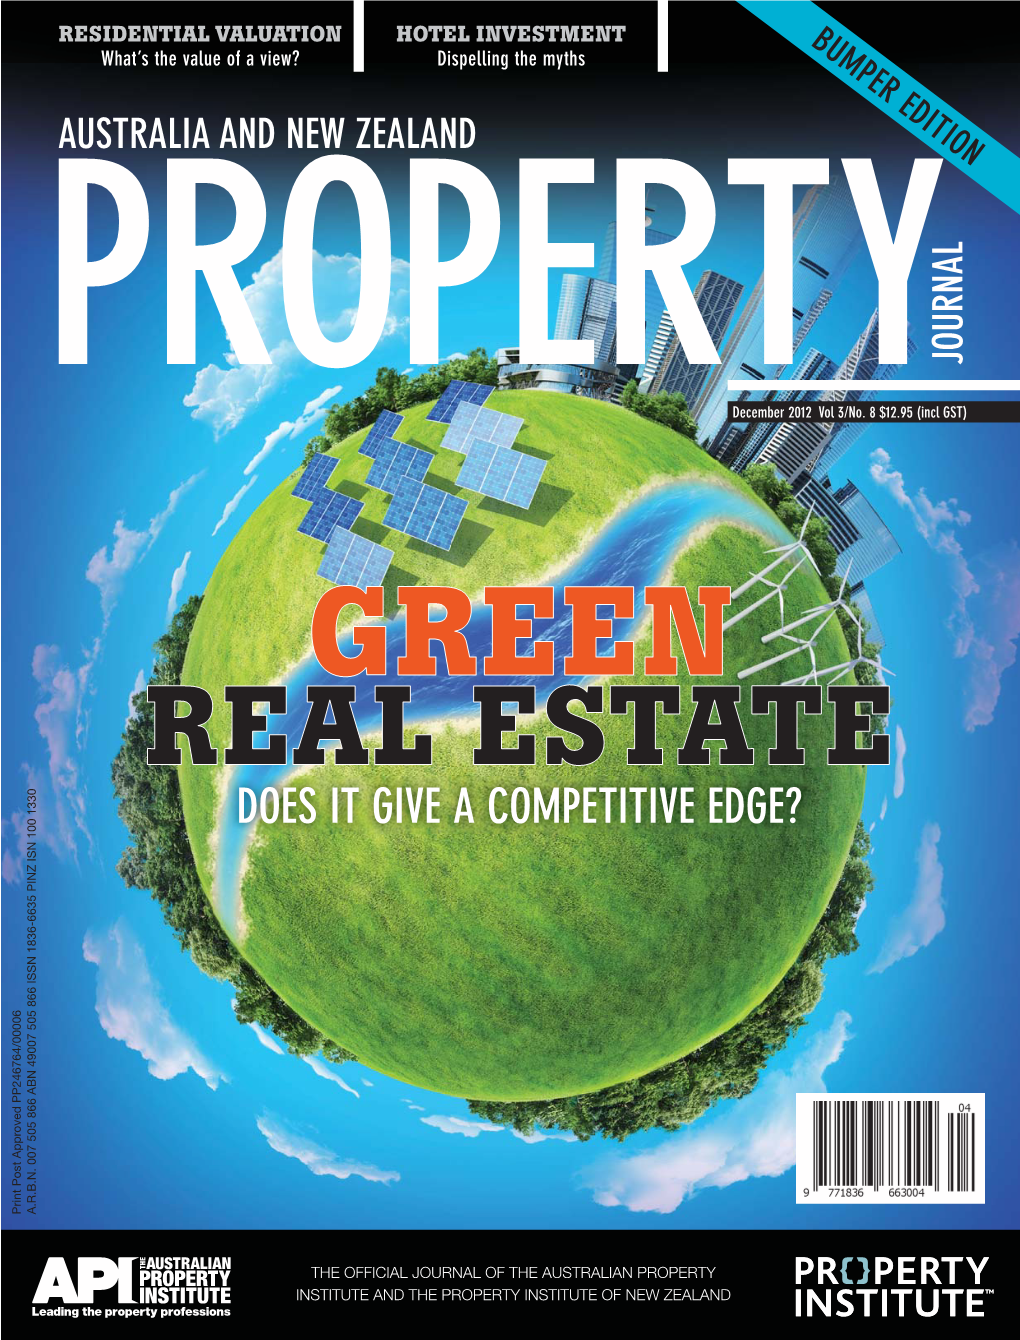 Australia and New Zealand Property Journal: April 2012